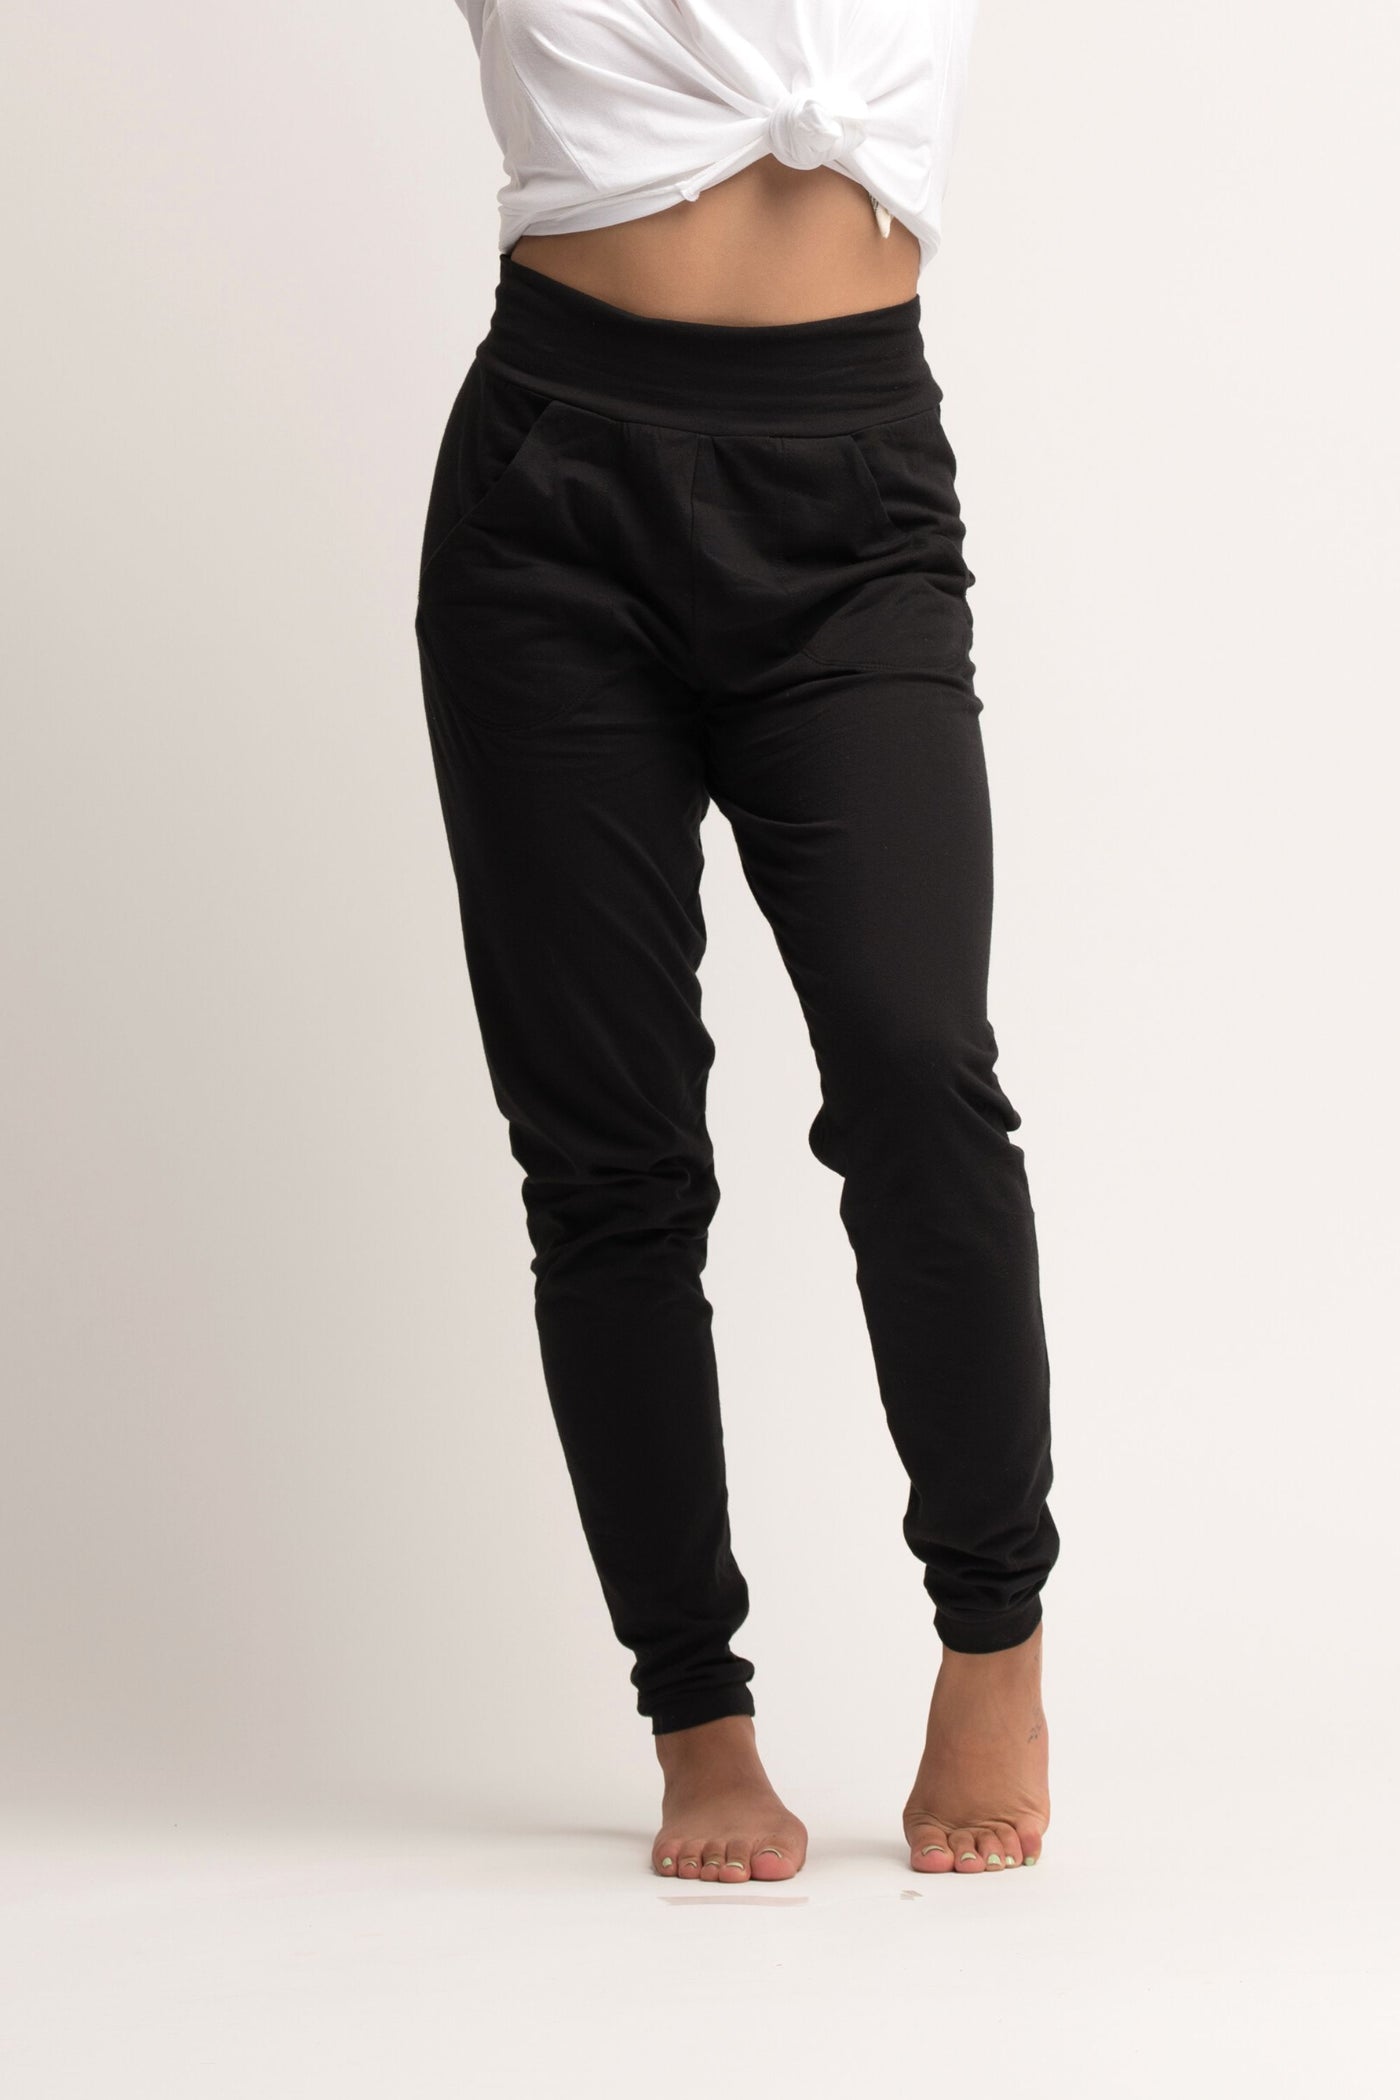 Mightly Girls Fair Trade Organic Cotton Flare Leggings Yoga Pant - XX-Large  (14), Black